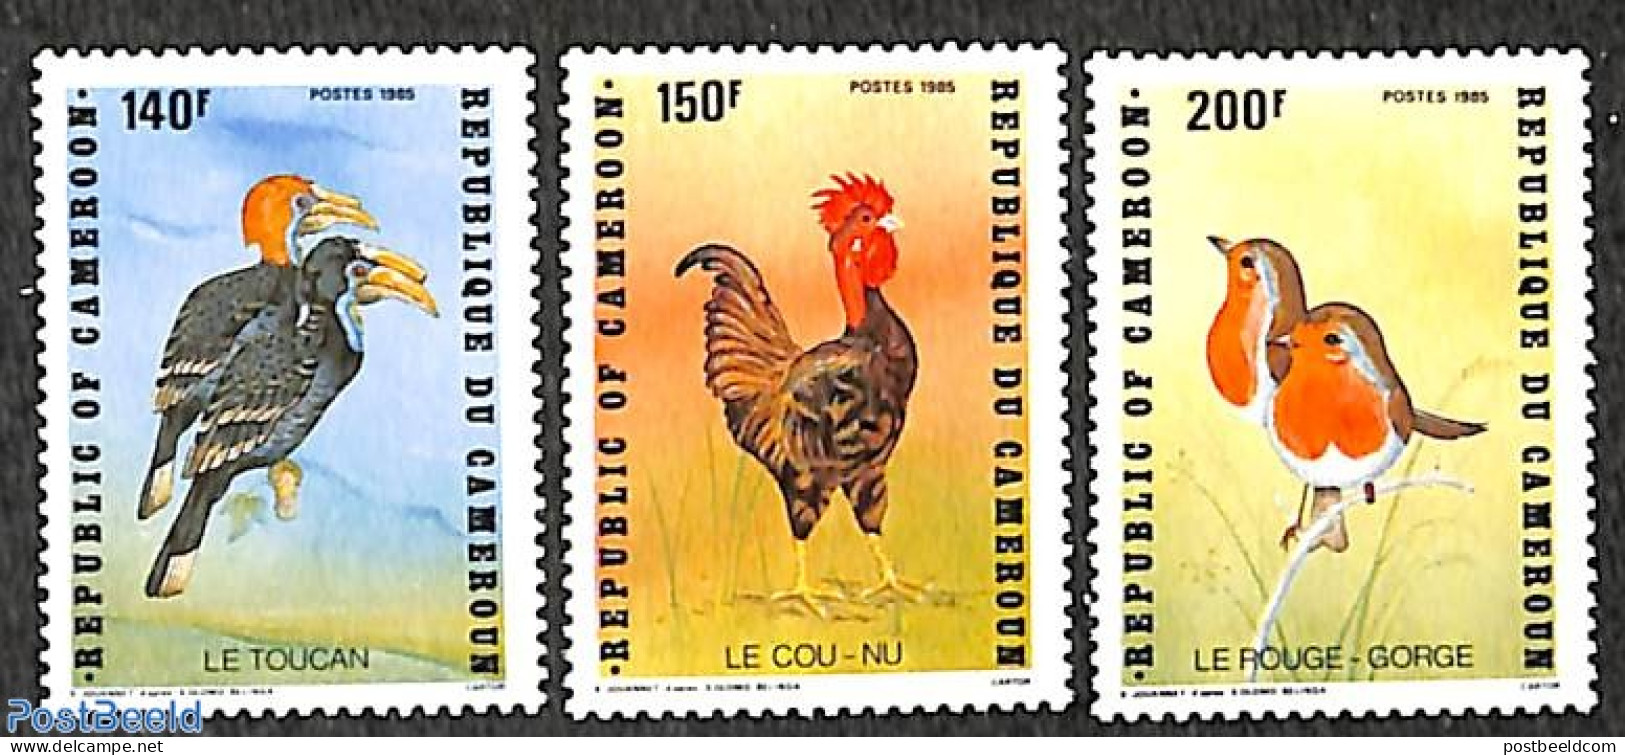 Cameroon 1985 Birds 3v, Mint NH, Nature - Birds - Poultry - Kameroen (1960-...)